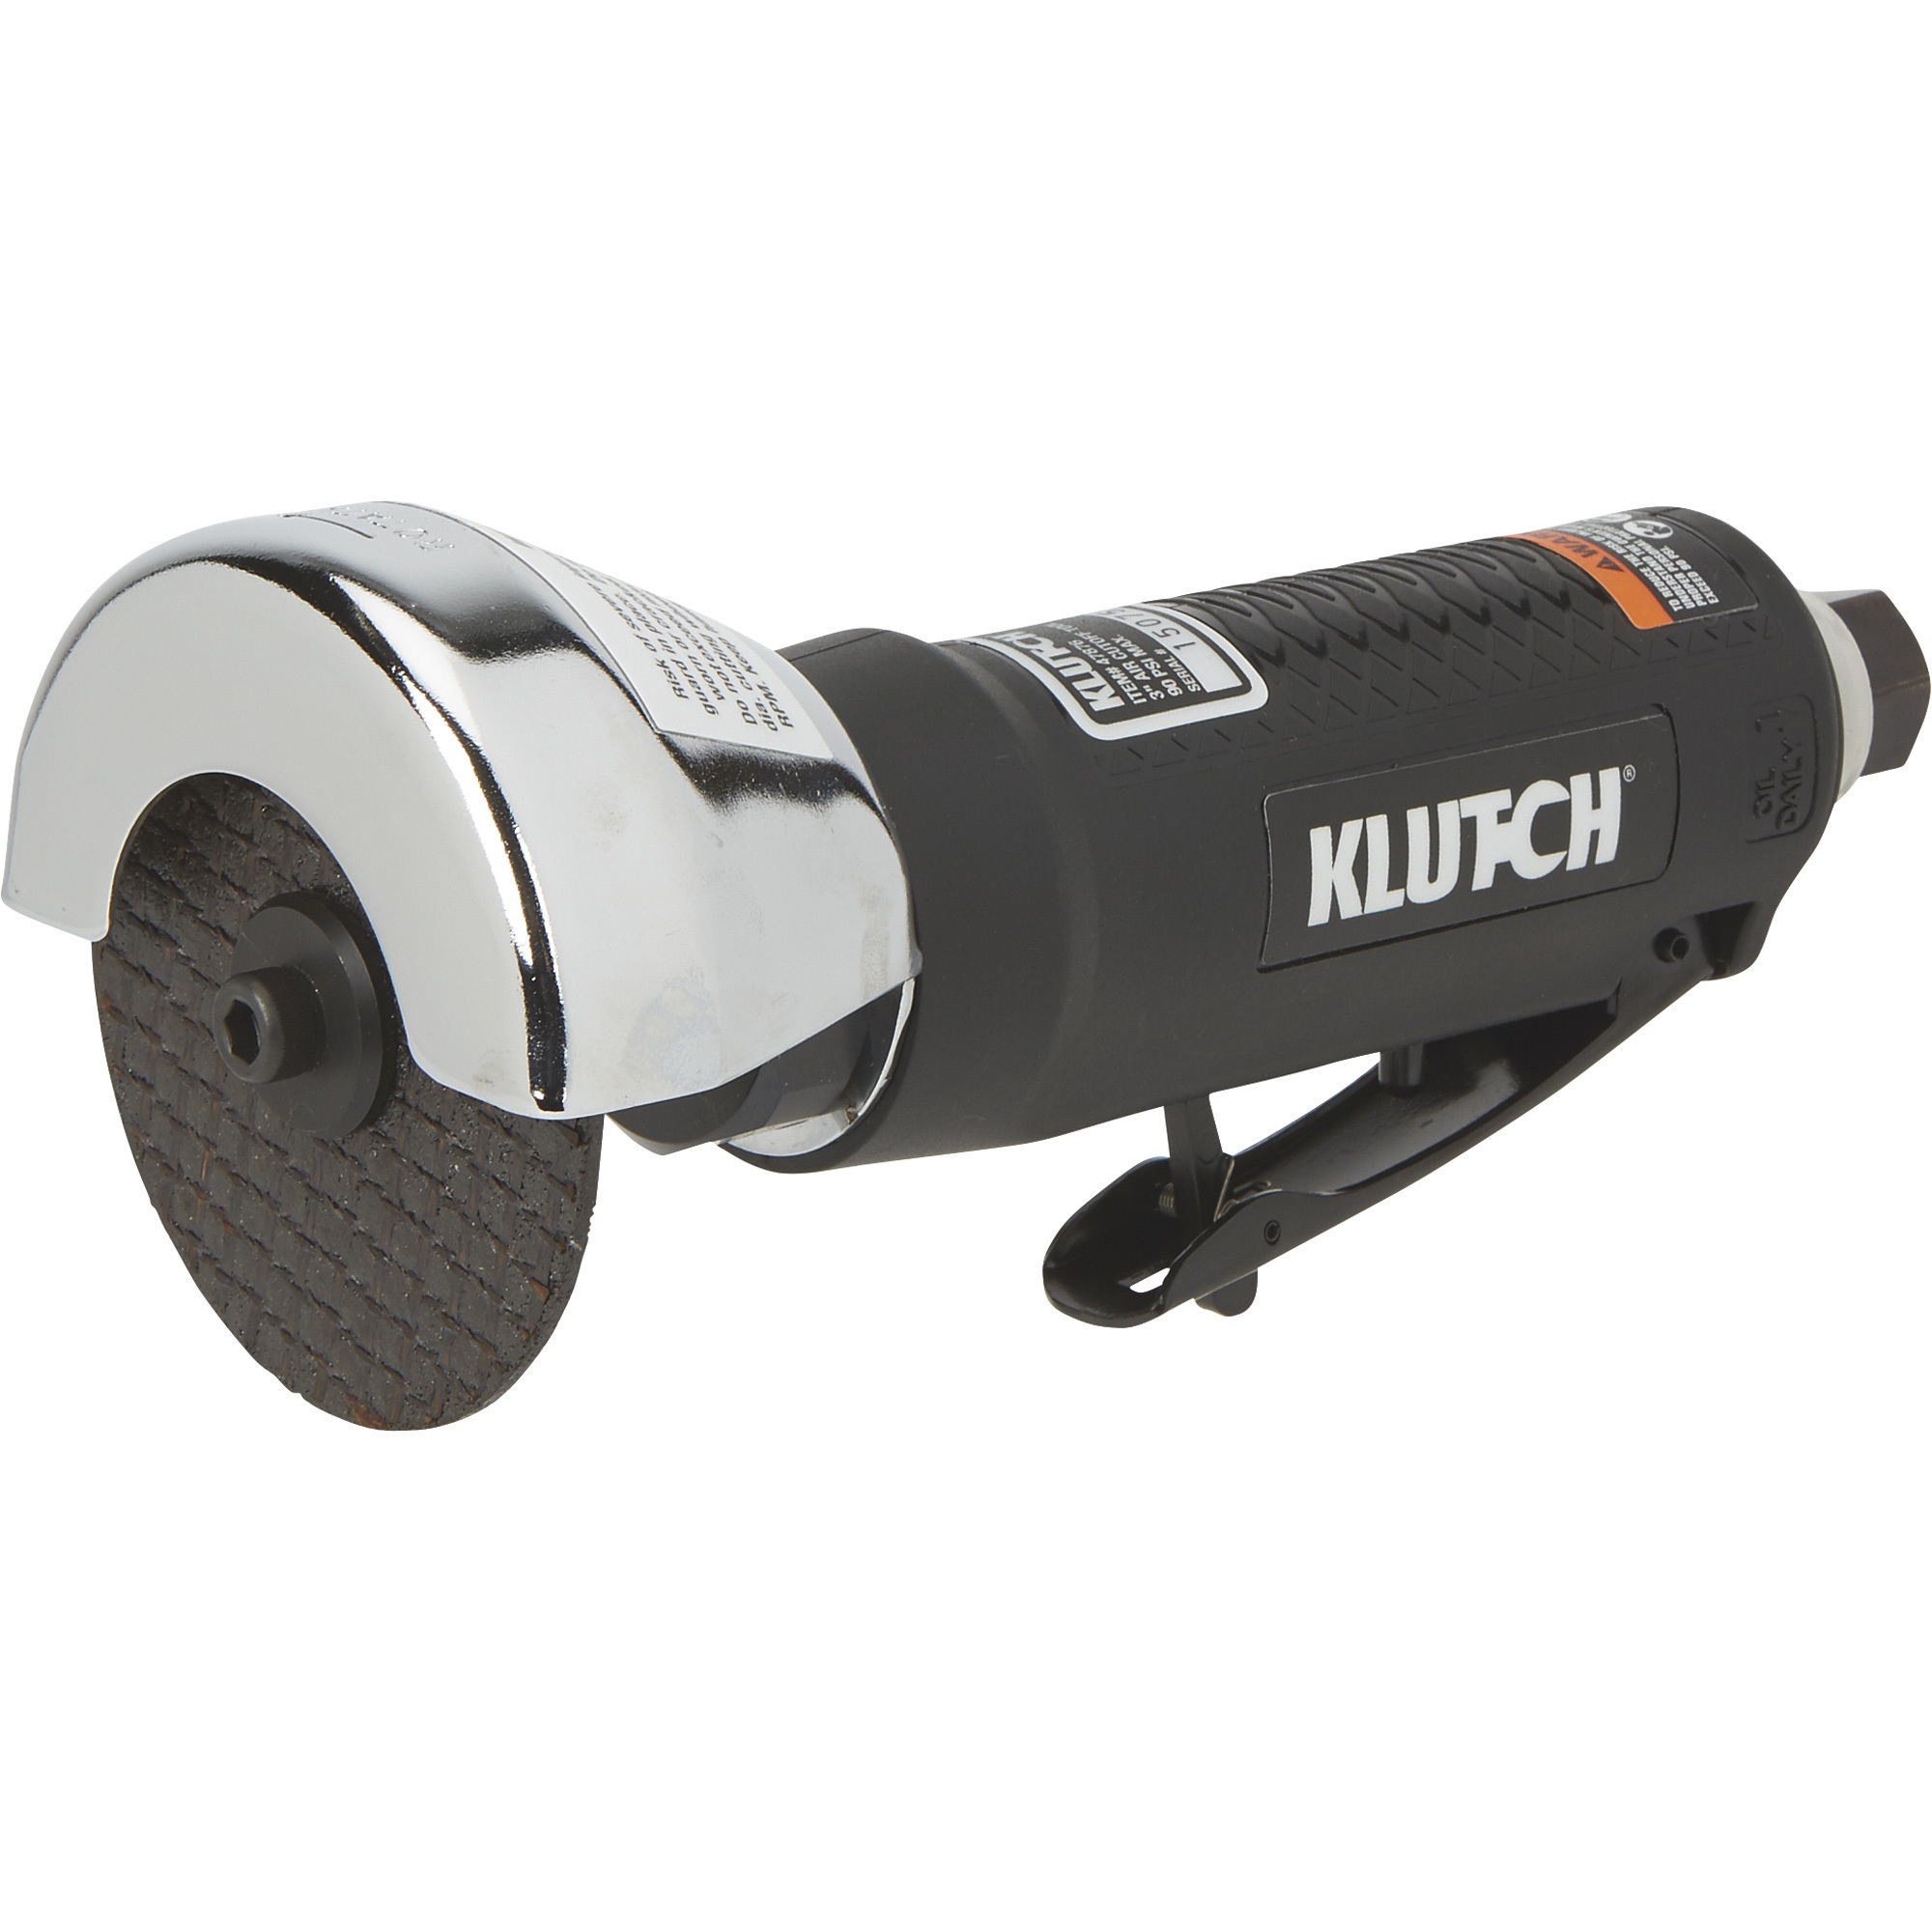 Klutch Air Cutoff Tool, 3Inch Disk, 20,000 RPM